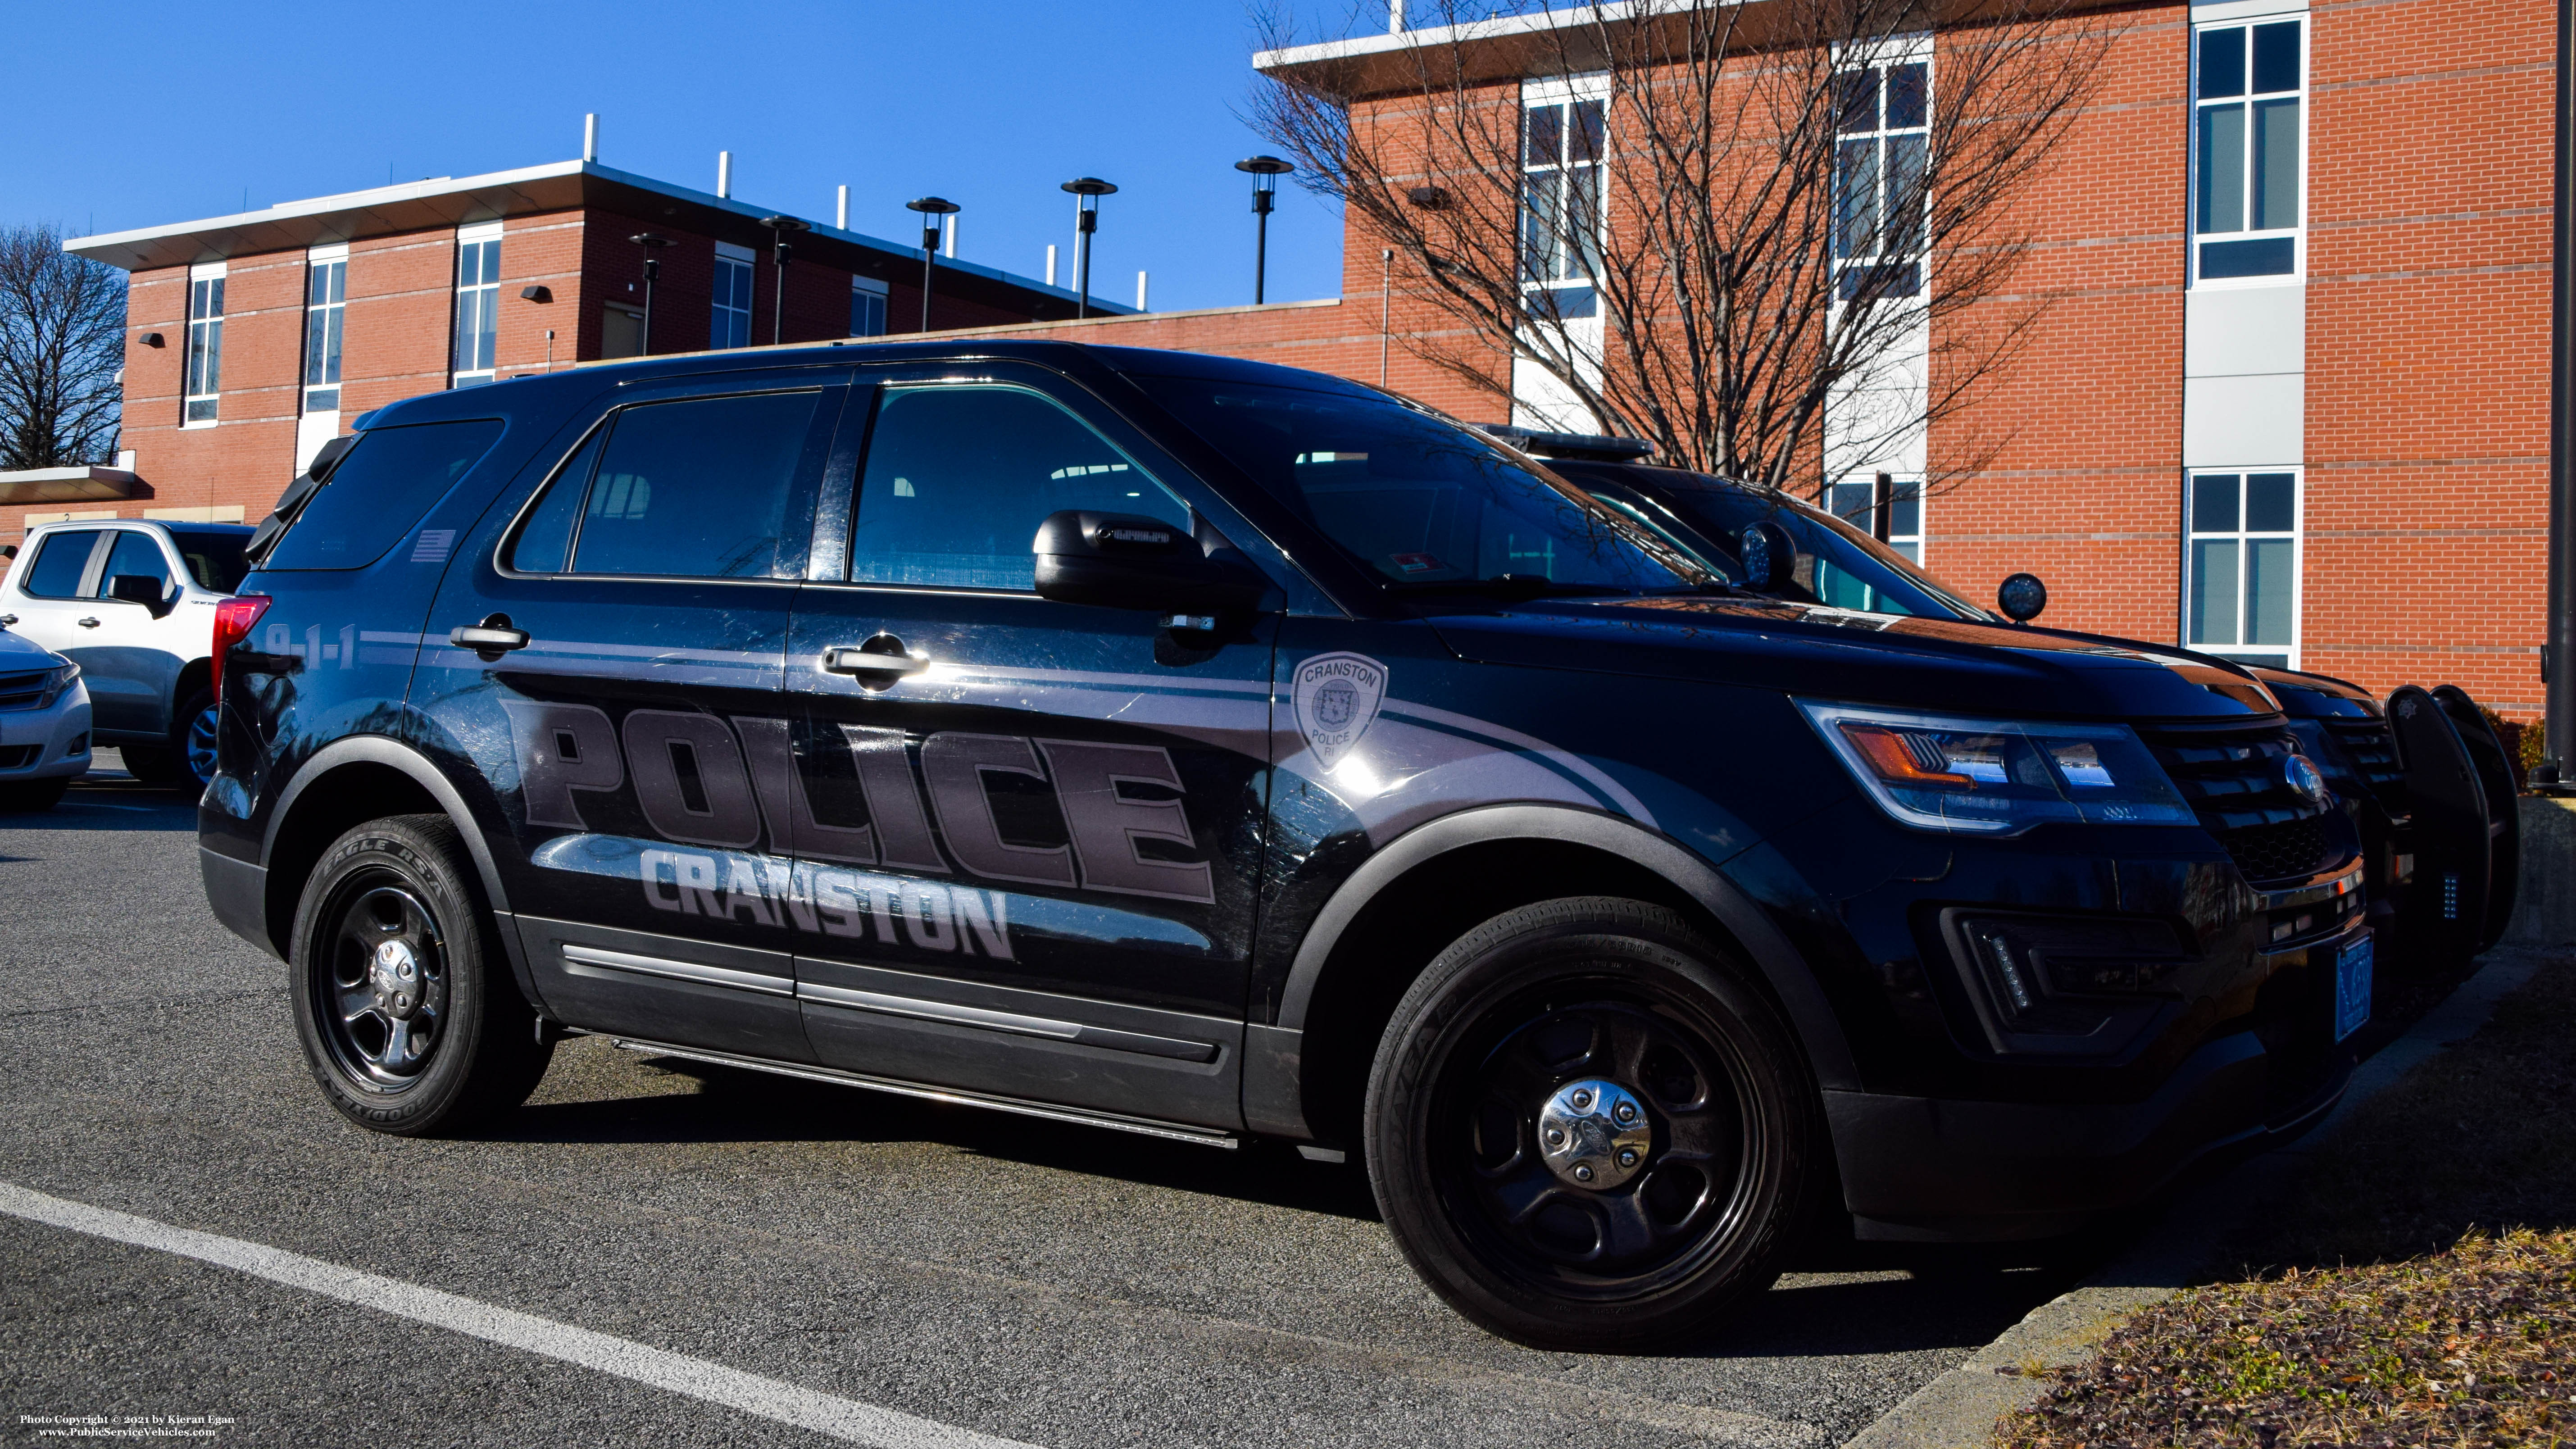 A photo  of Cranston Police
            Cruiser 205, a 2019 Ford Police Interceptor Utility             taken by Kieran Egan